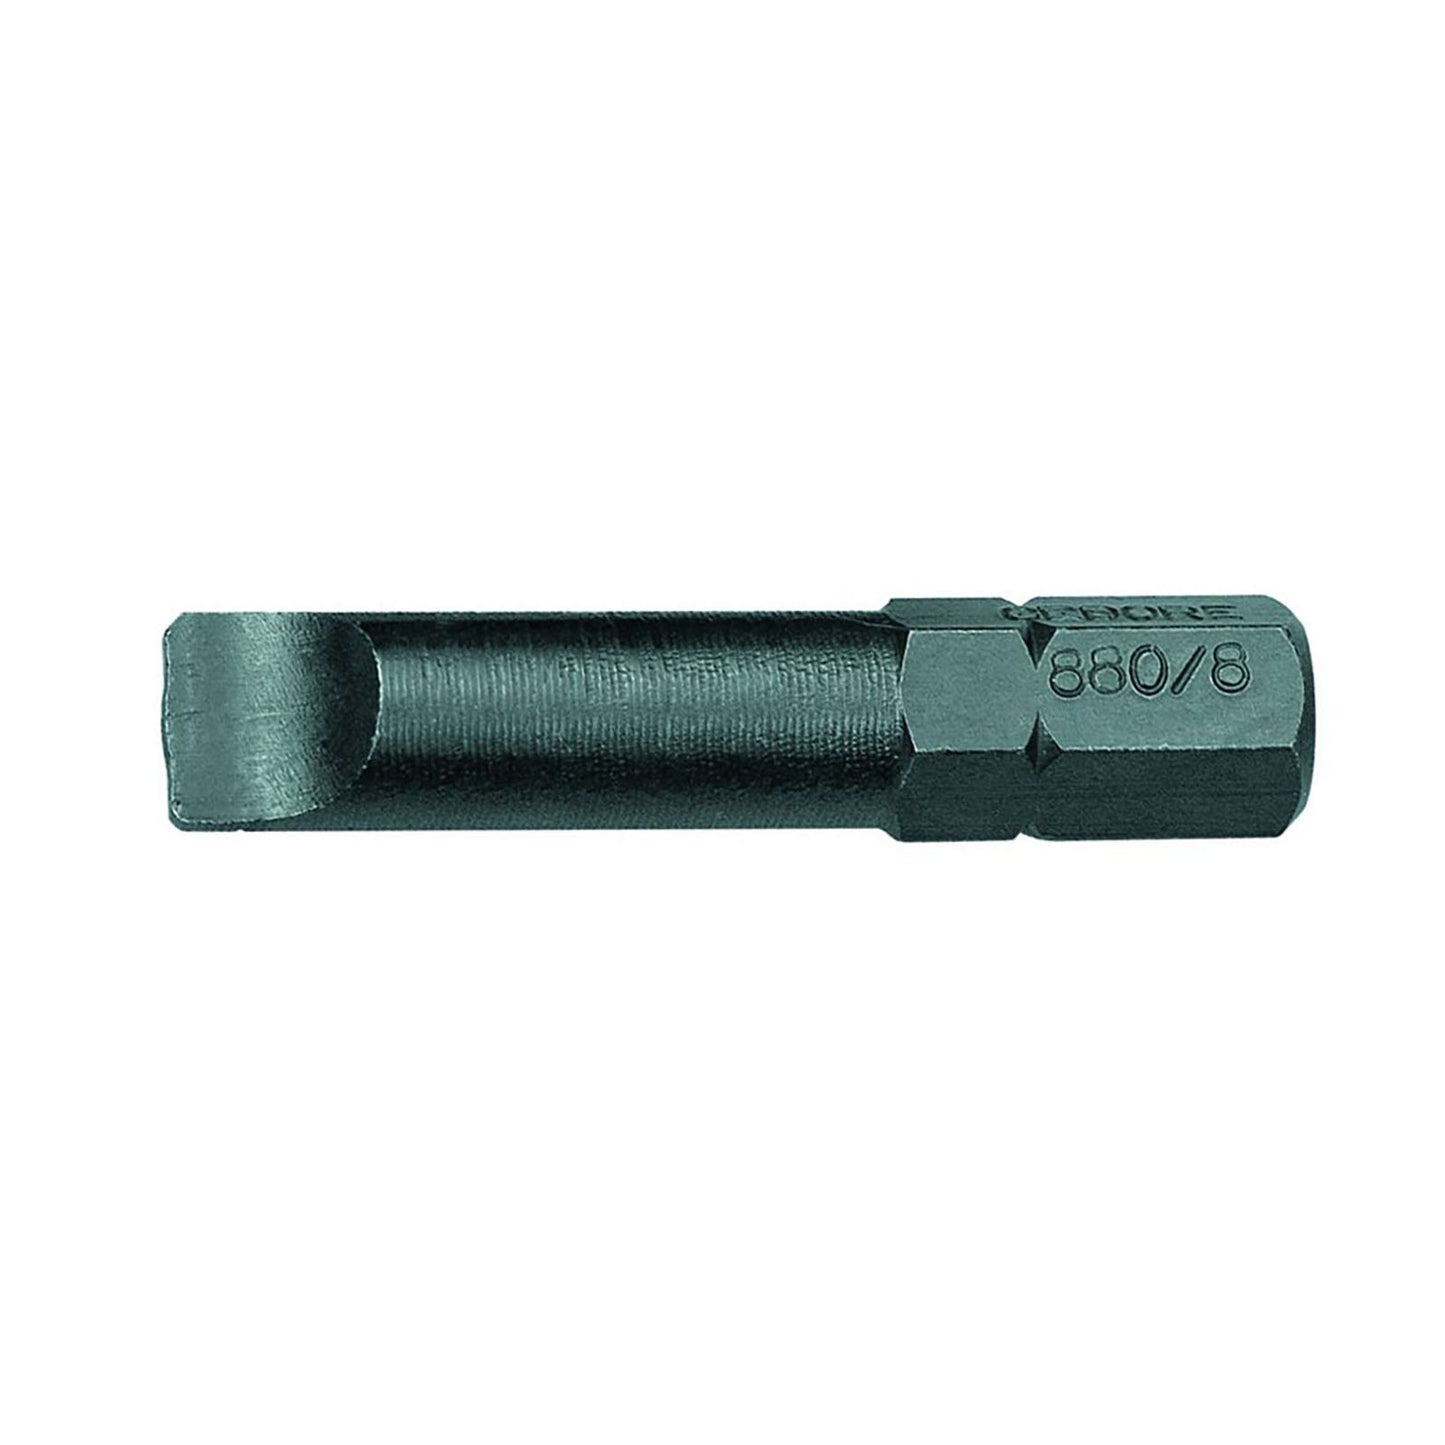 GEDORE 880 9 - Flat Tip 5/16", 9 mm (6567120)